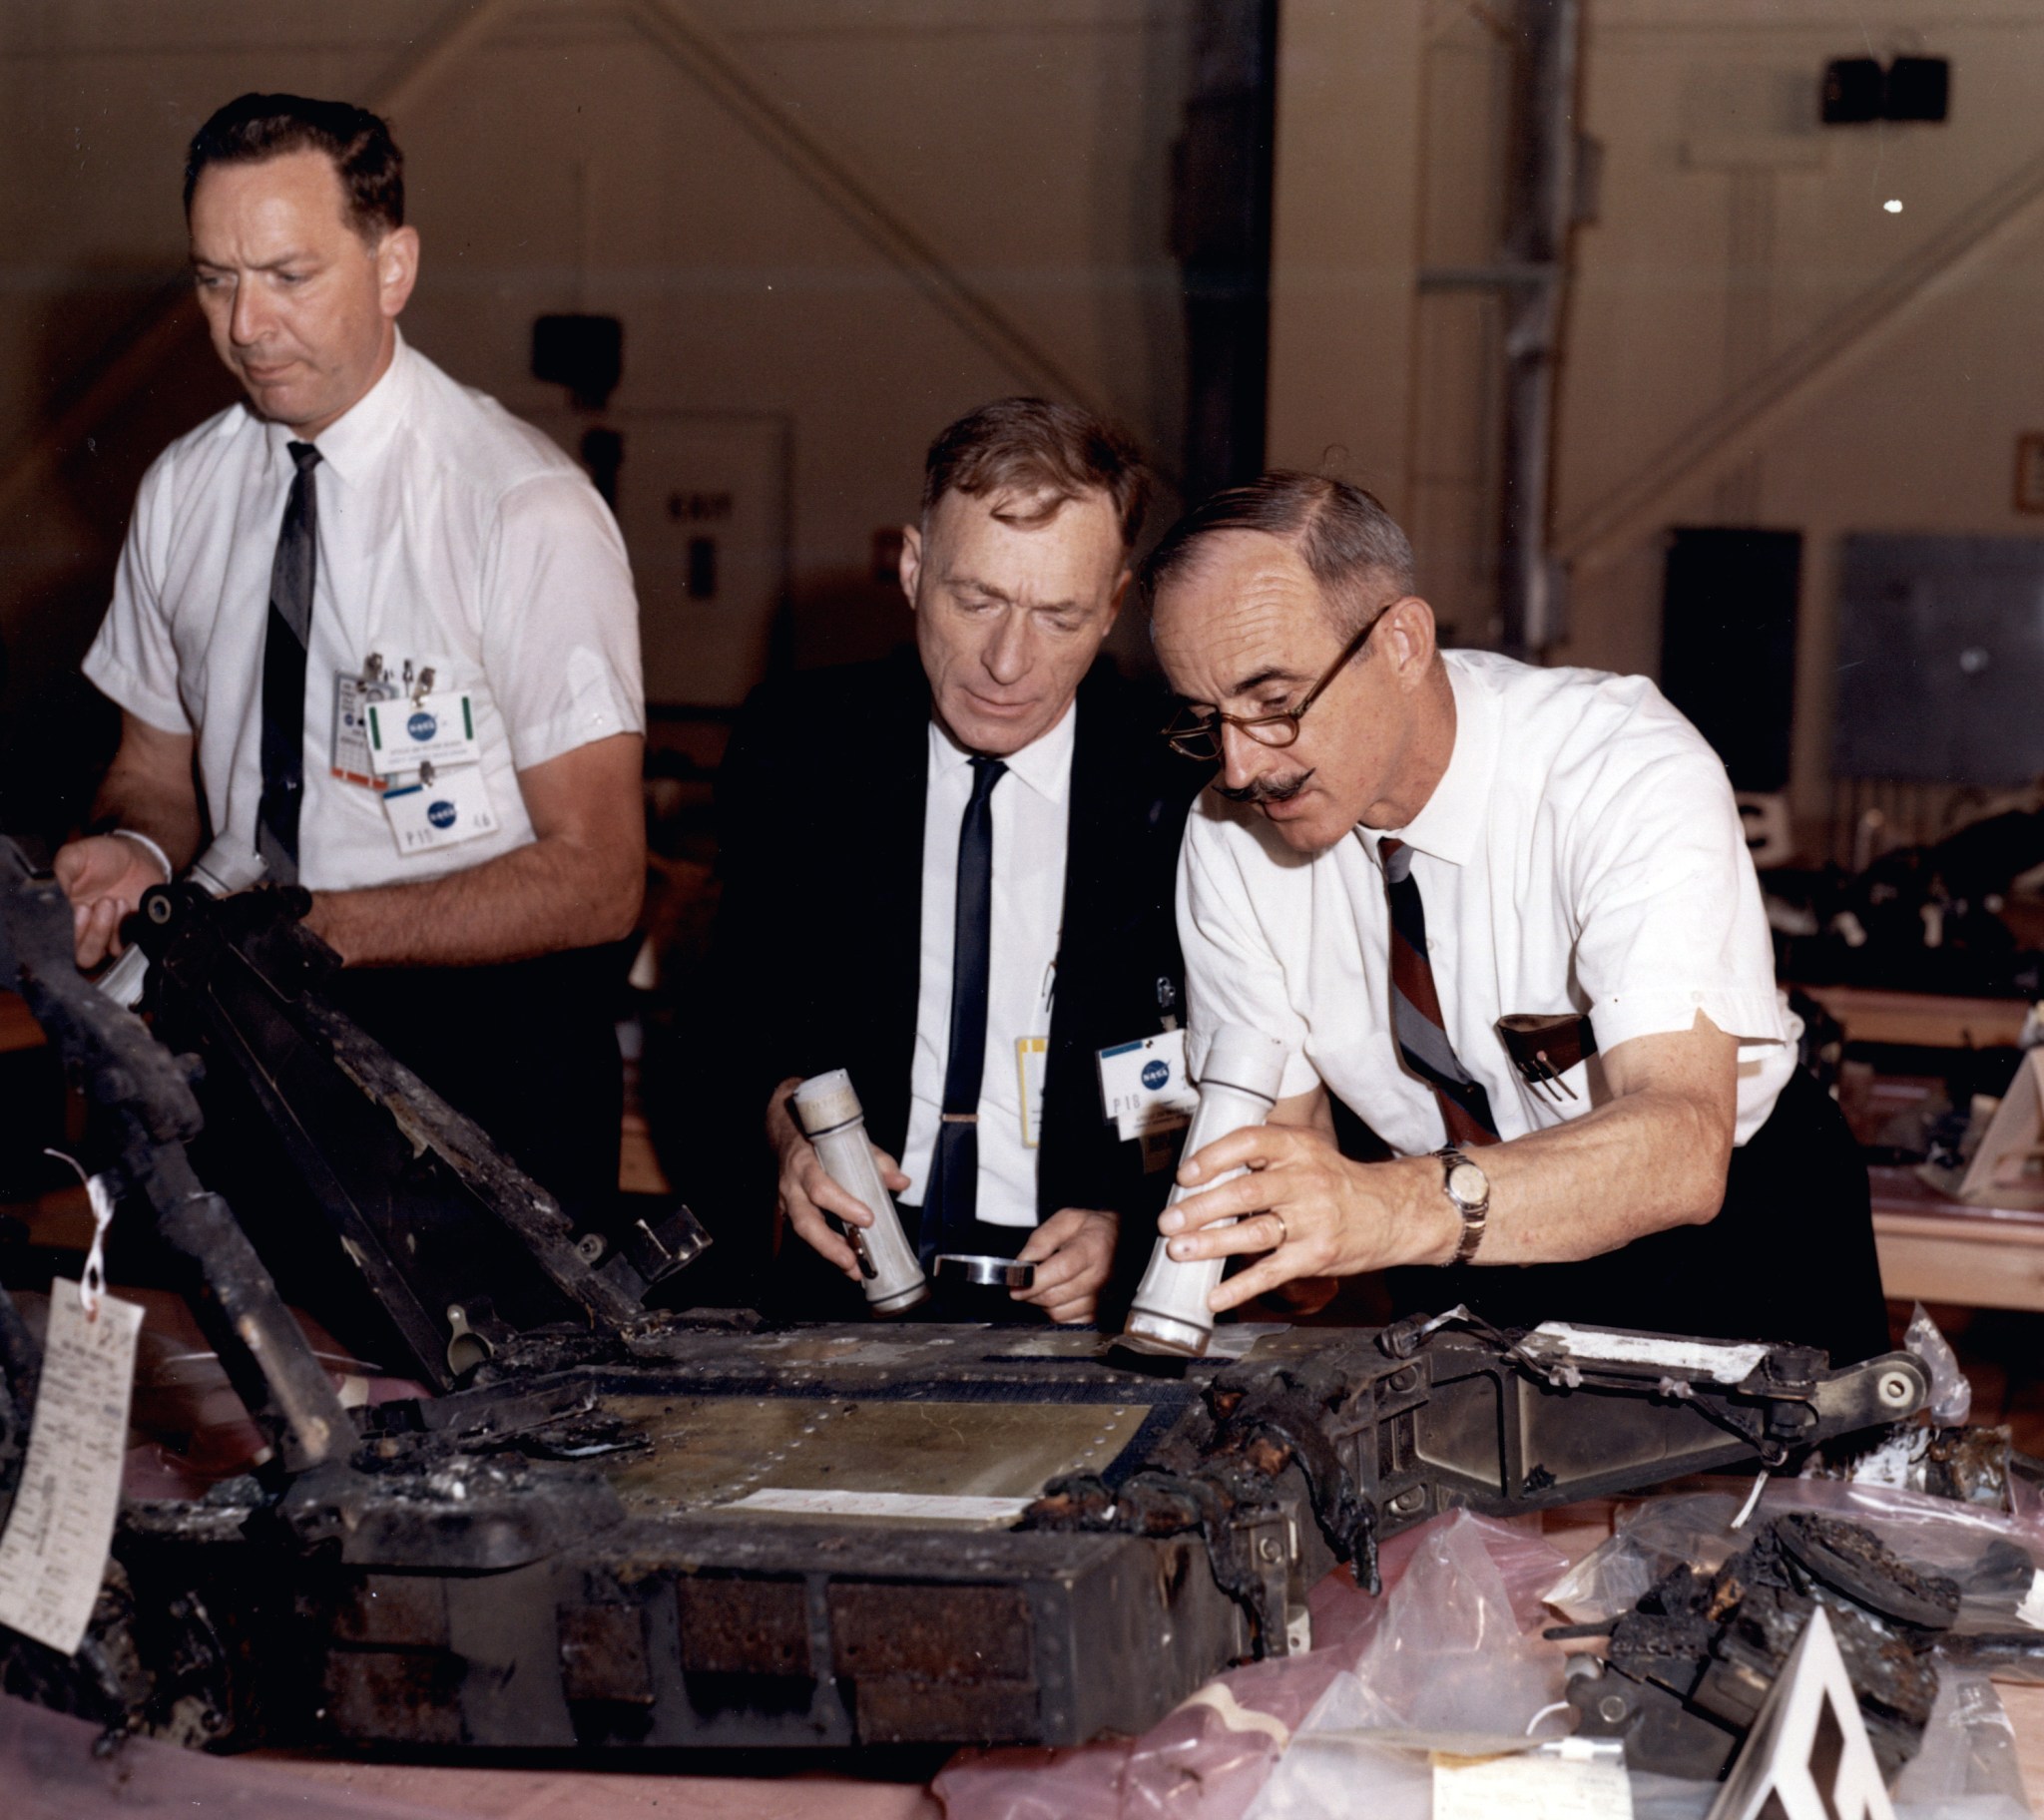 Three men looking at equipment.